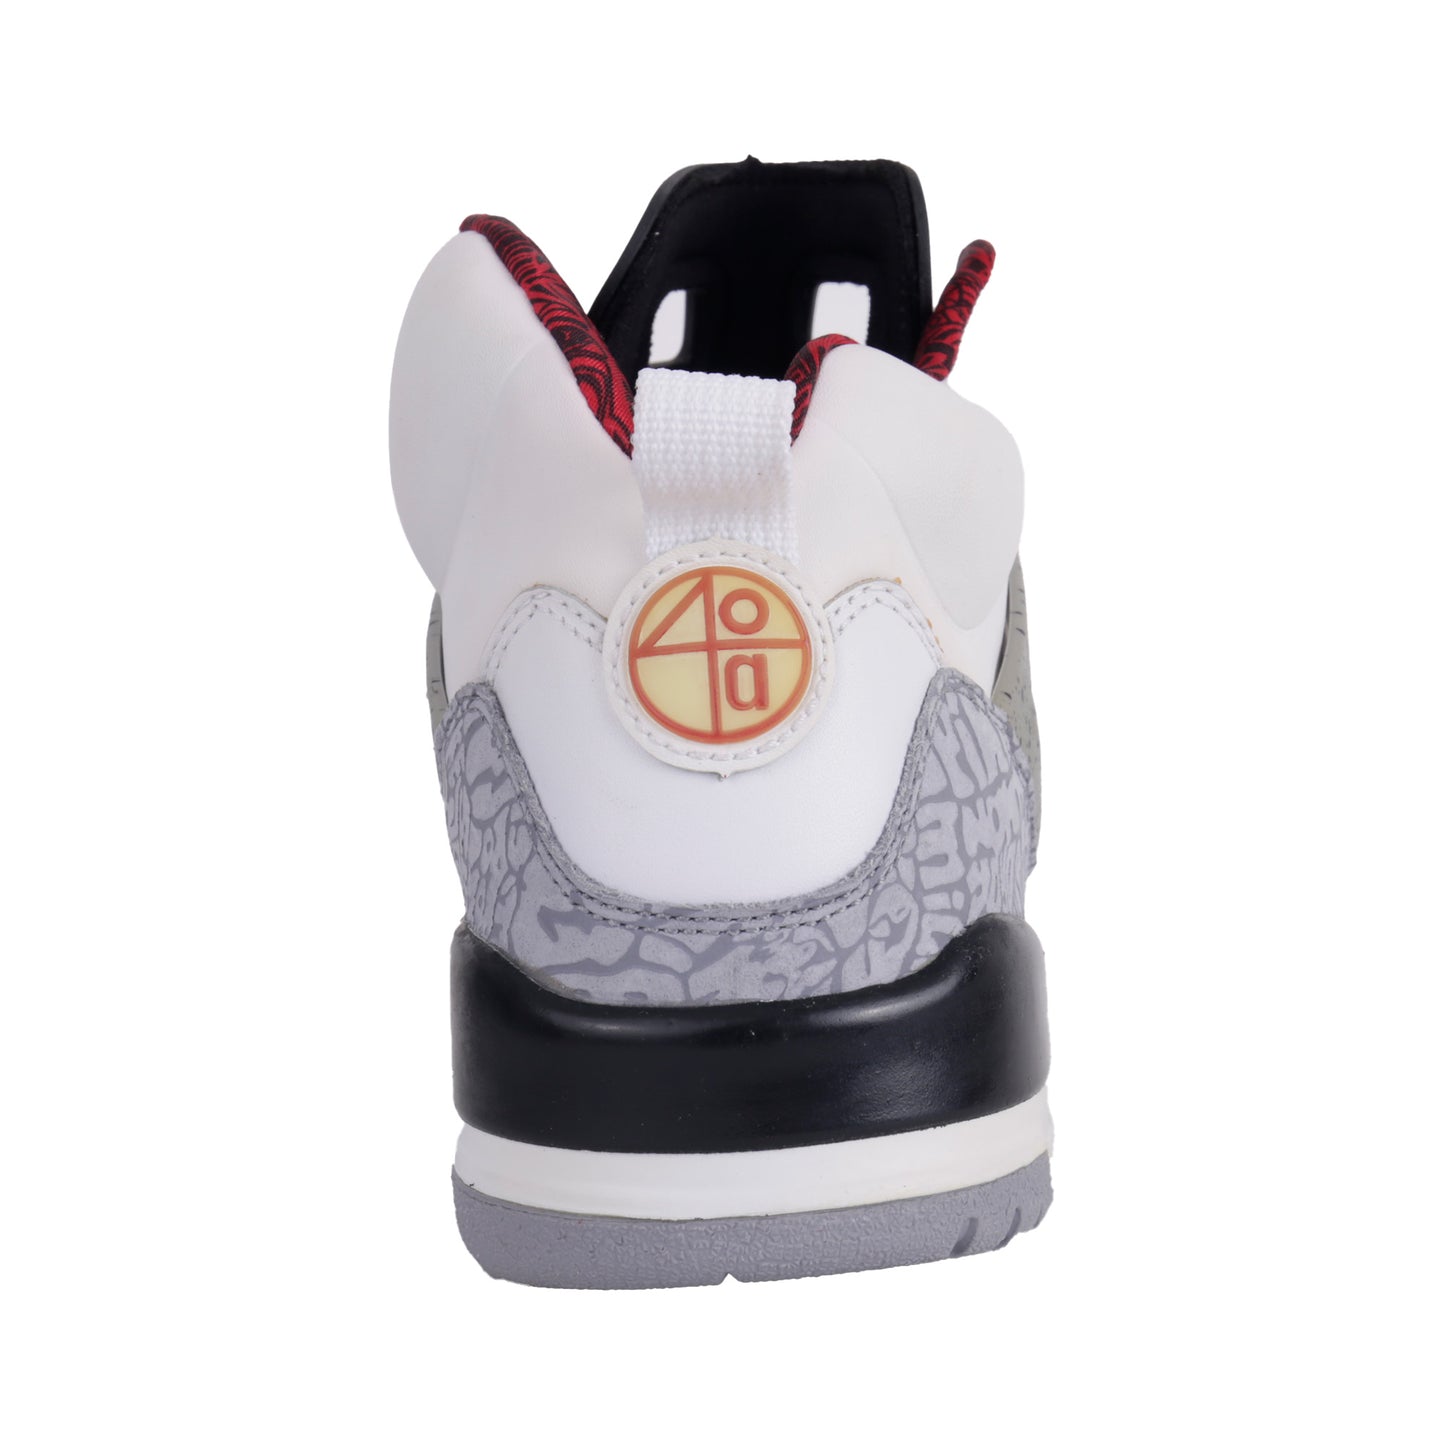 Jordan Spizike- White/Cement- Size 9.5